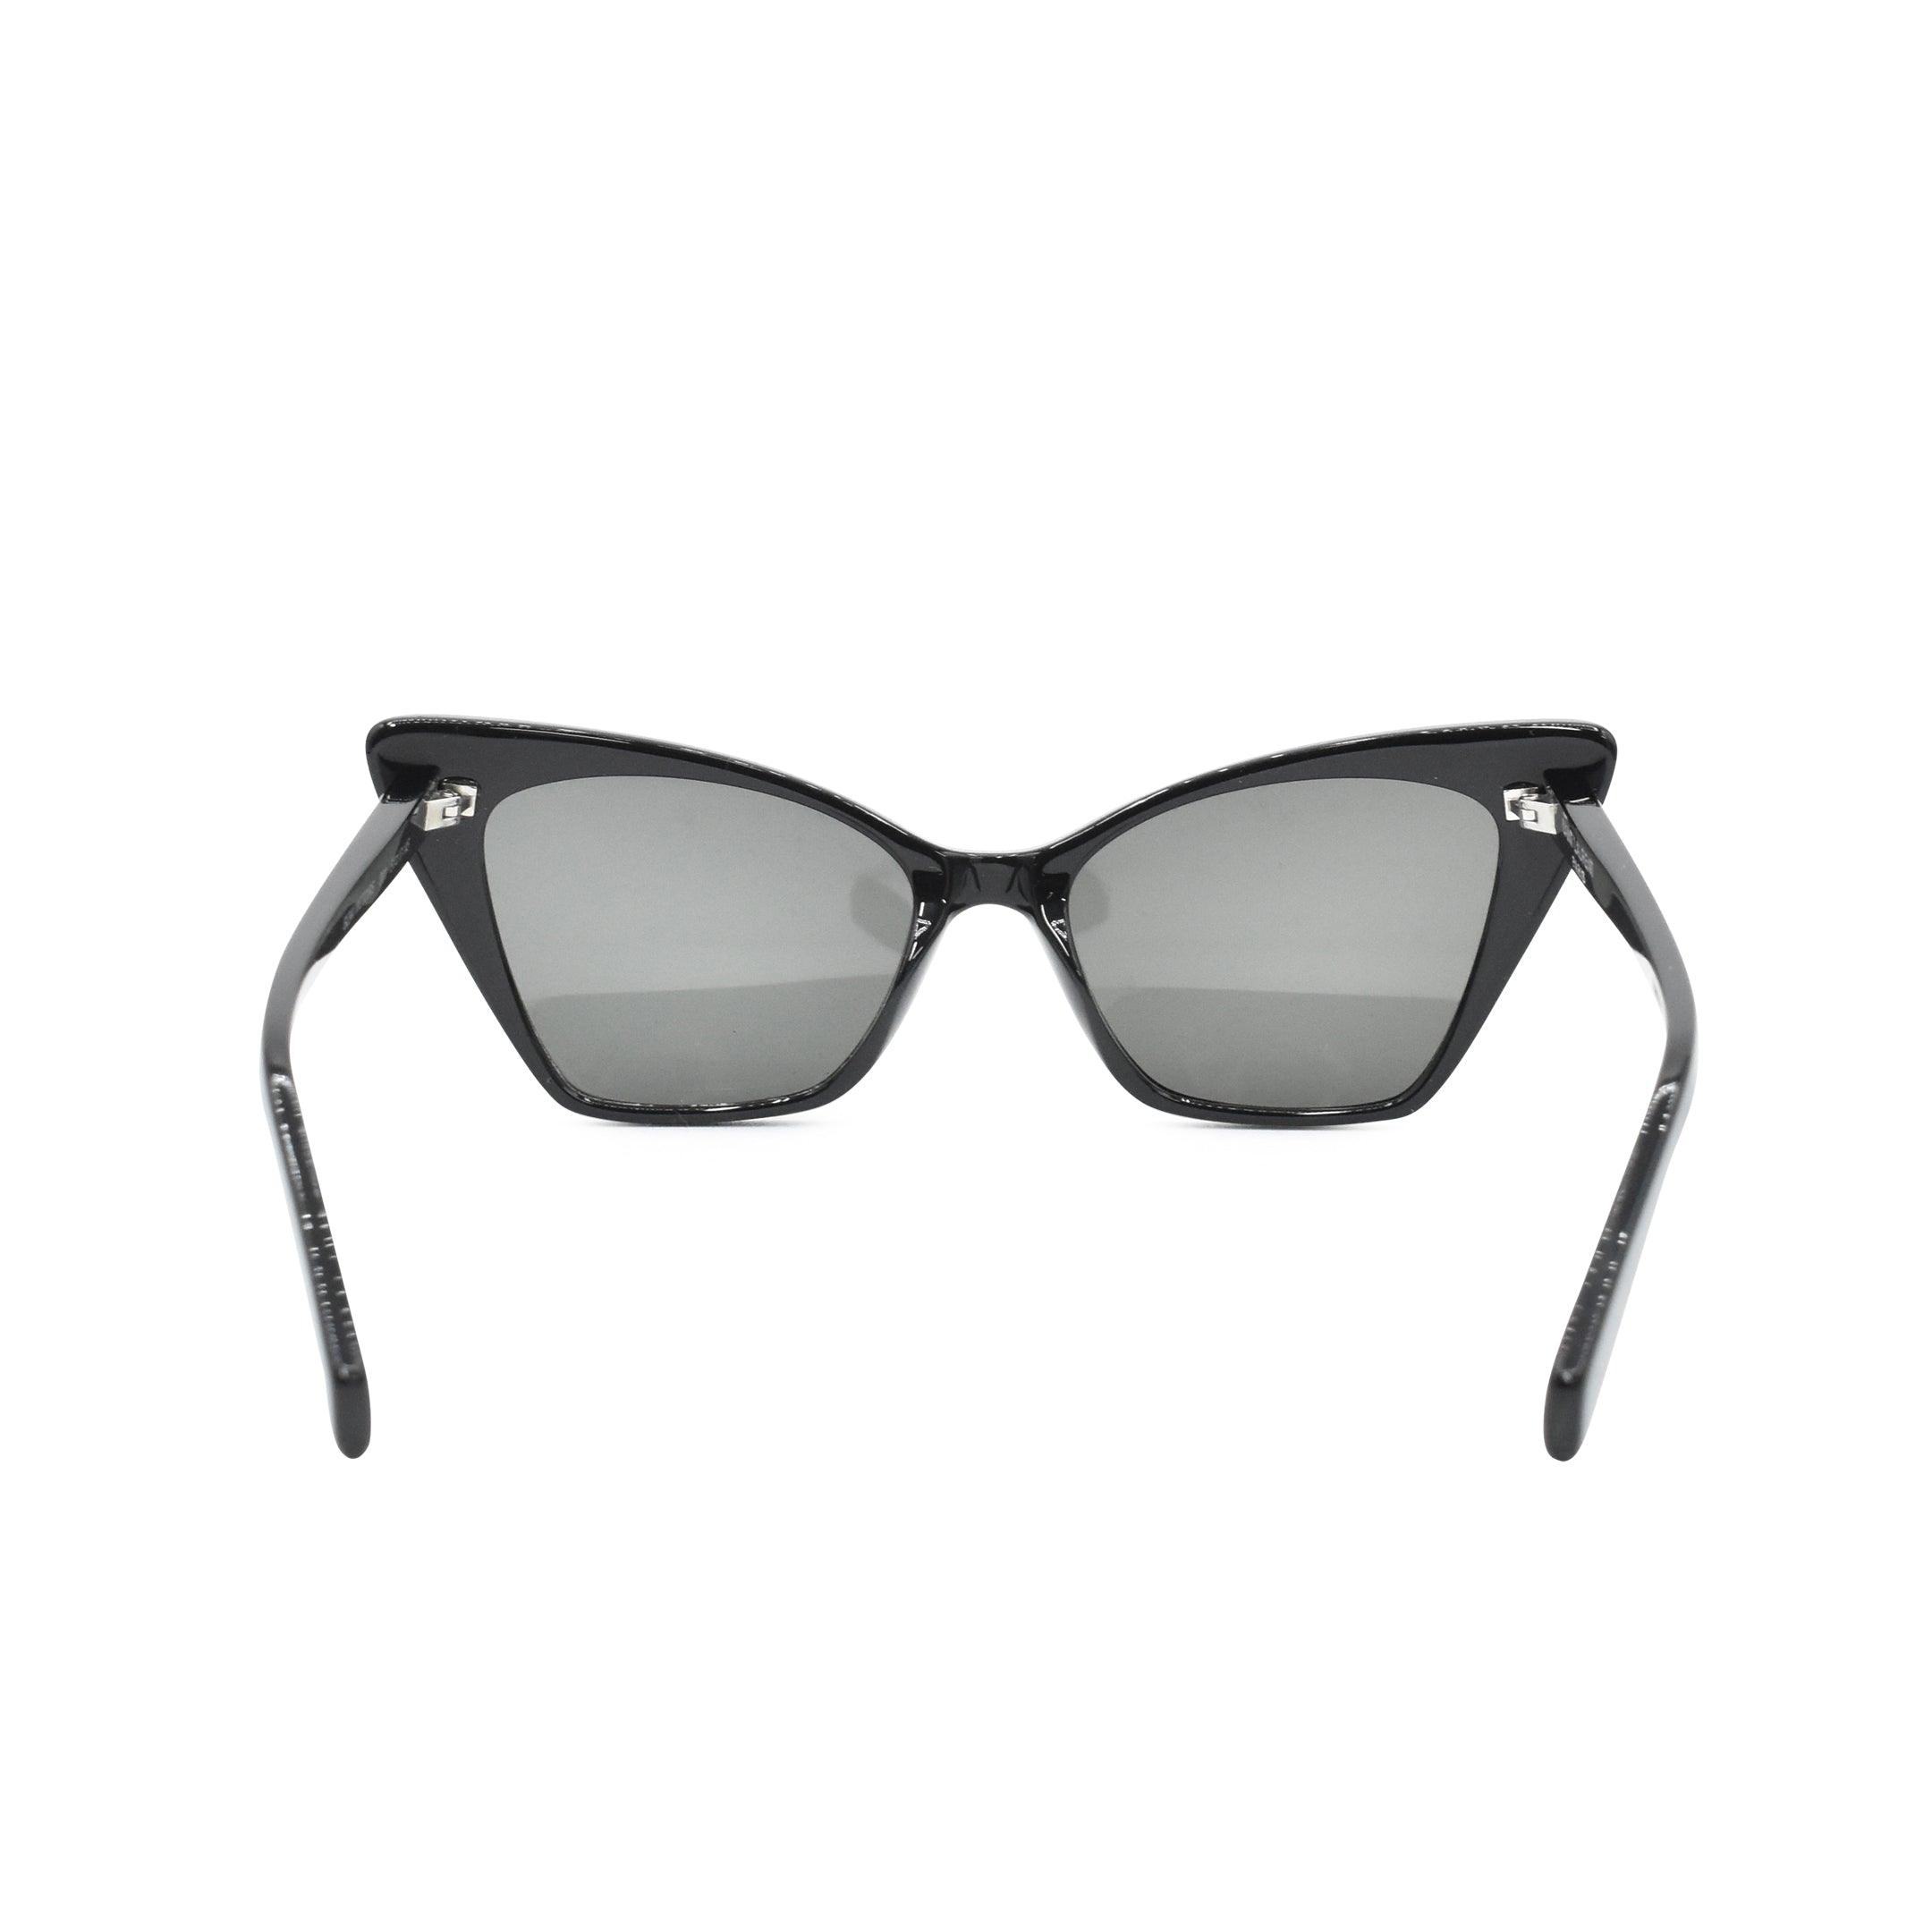 Saint Laurent Cat Eye Sunglasses - Fashionably Yours